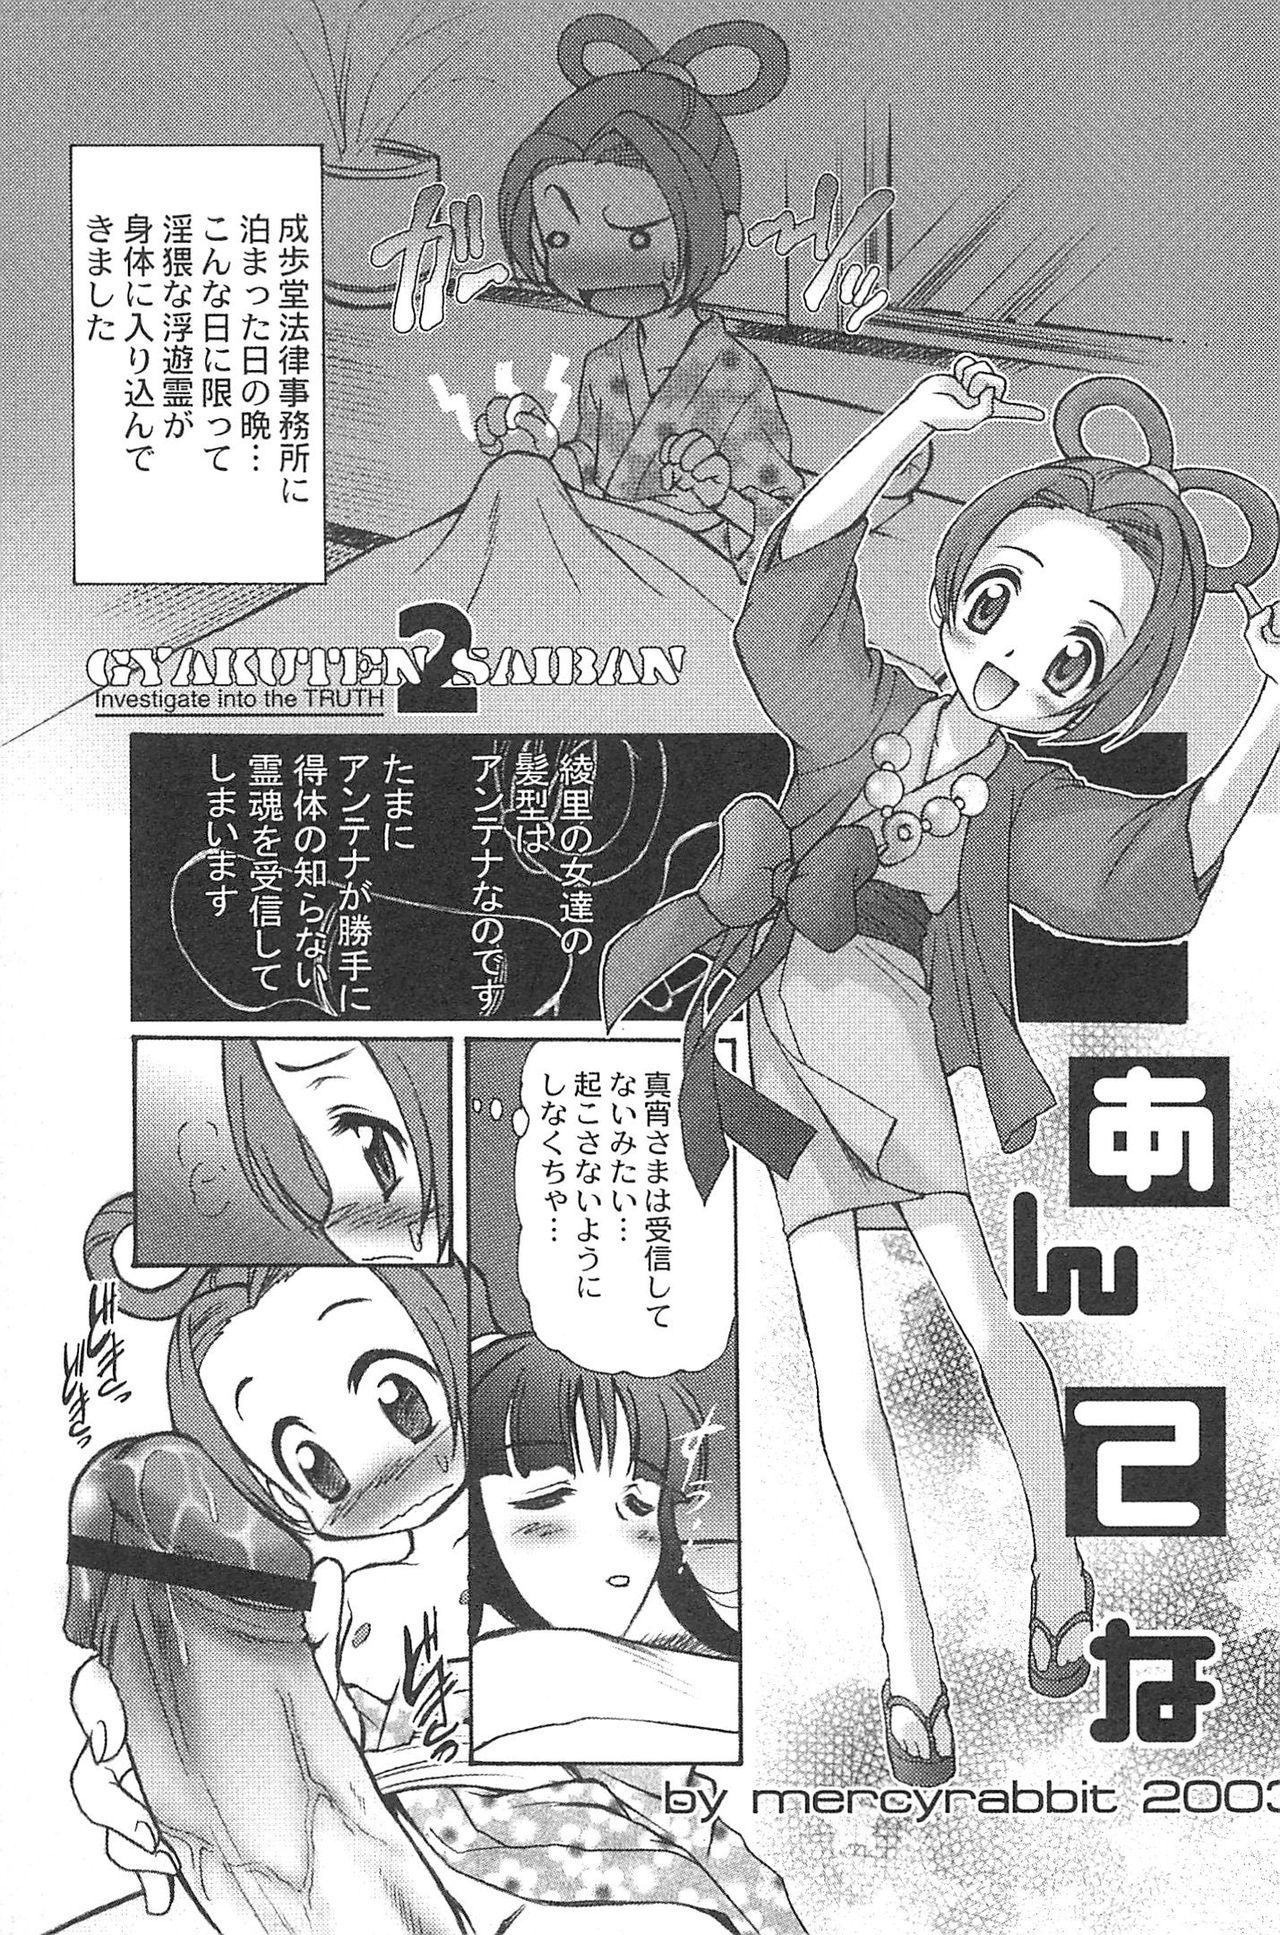 Ariake International X-rated Manga Festival Mercy Rabbit SPECIAL 112